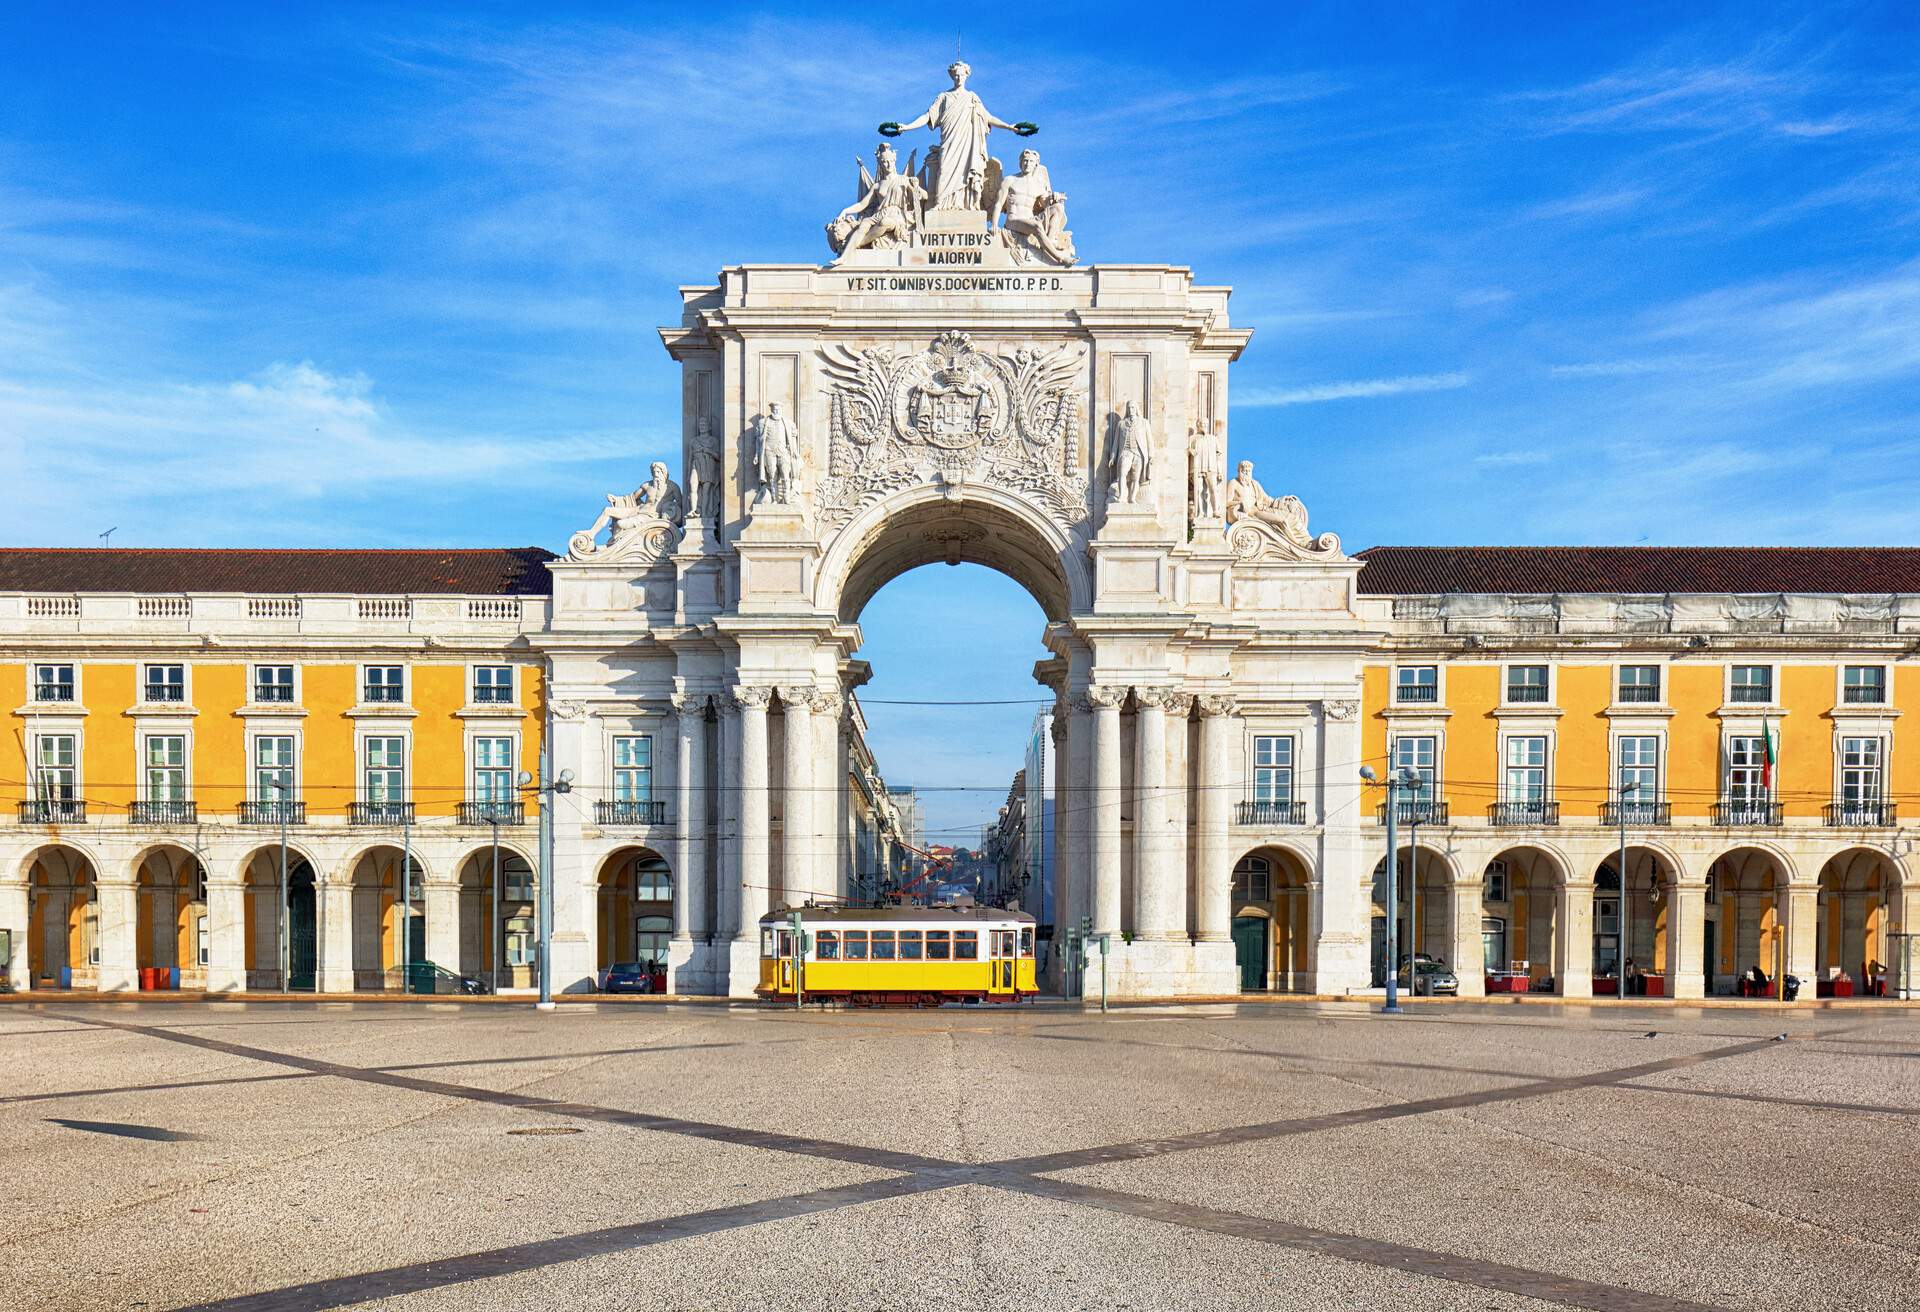 Praca do Comercio with yellow tram, Lisbon, Portugal